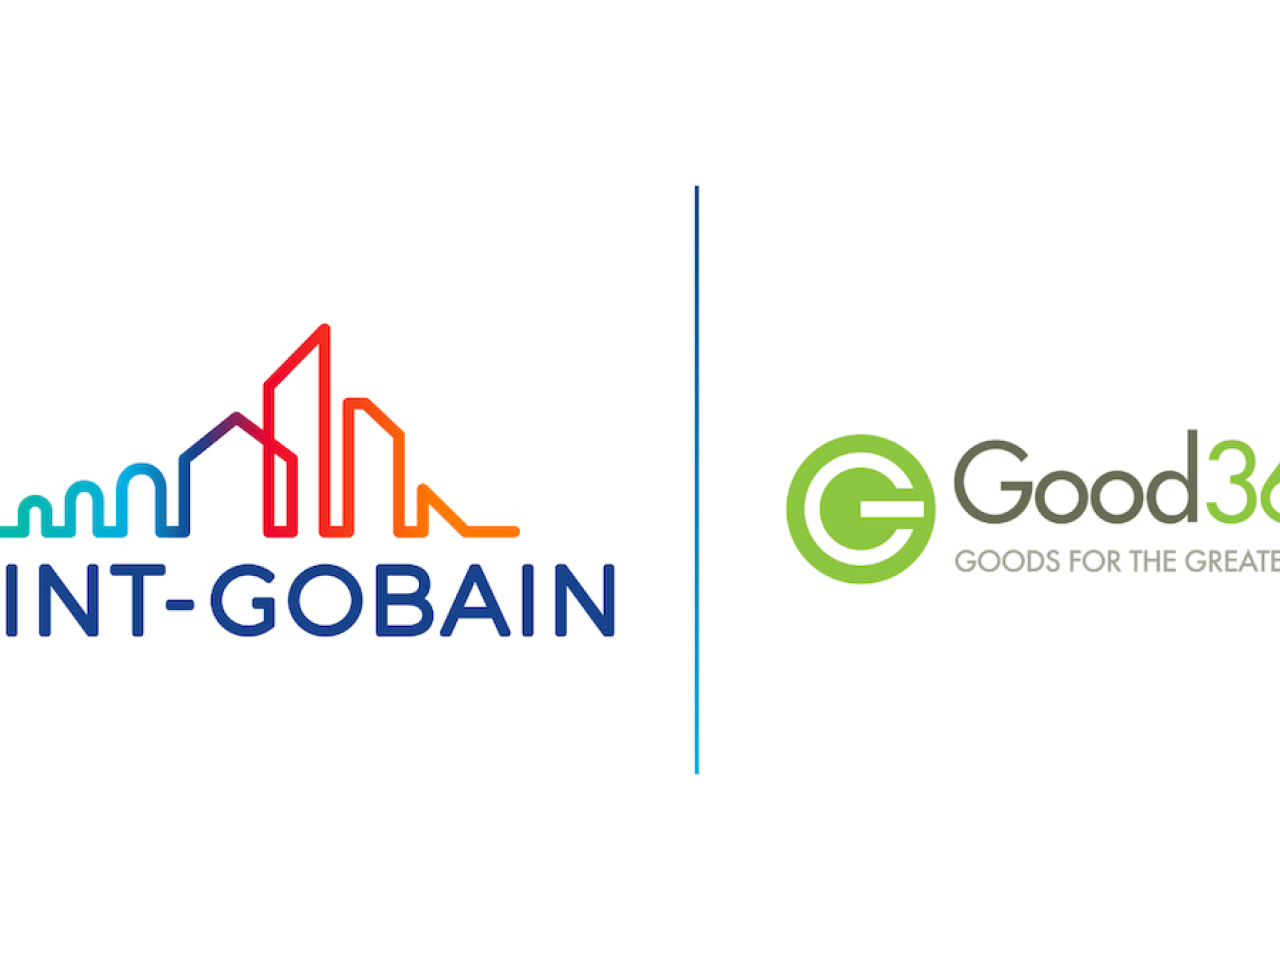 Saint-Gobain and Good360 Logo.